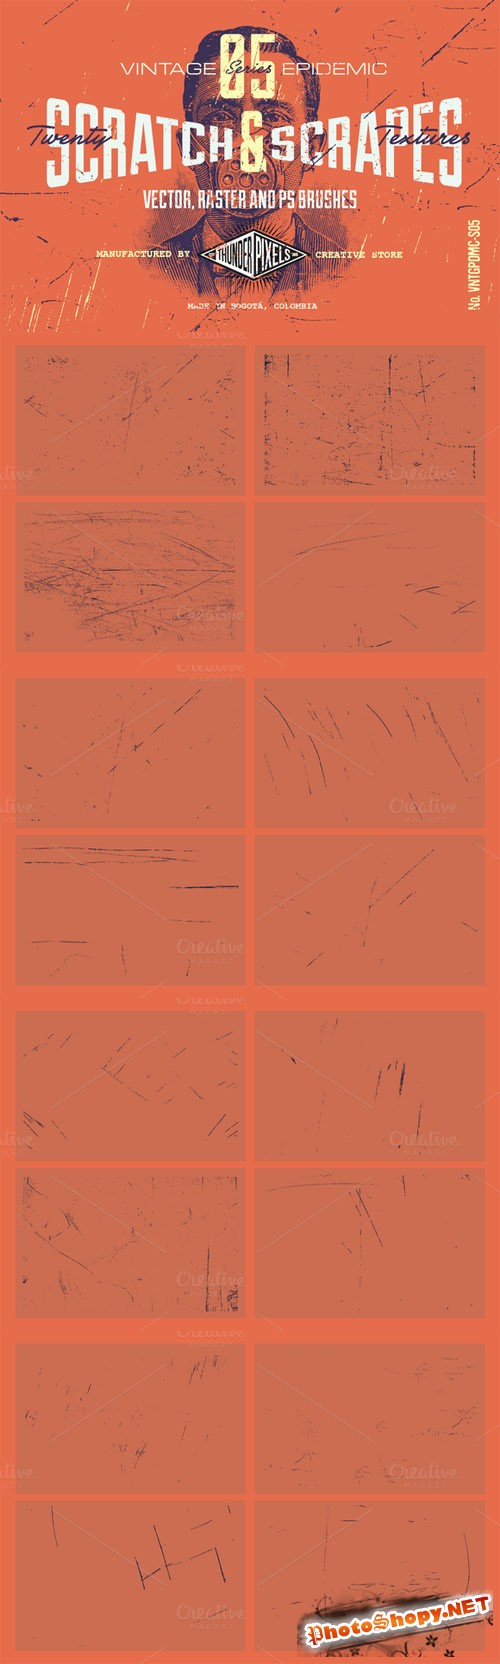 20 Scratch and Scrapes Textures - VES05